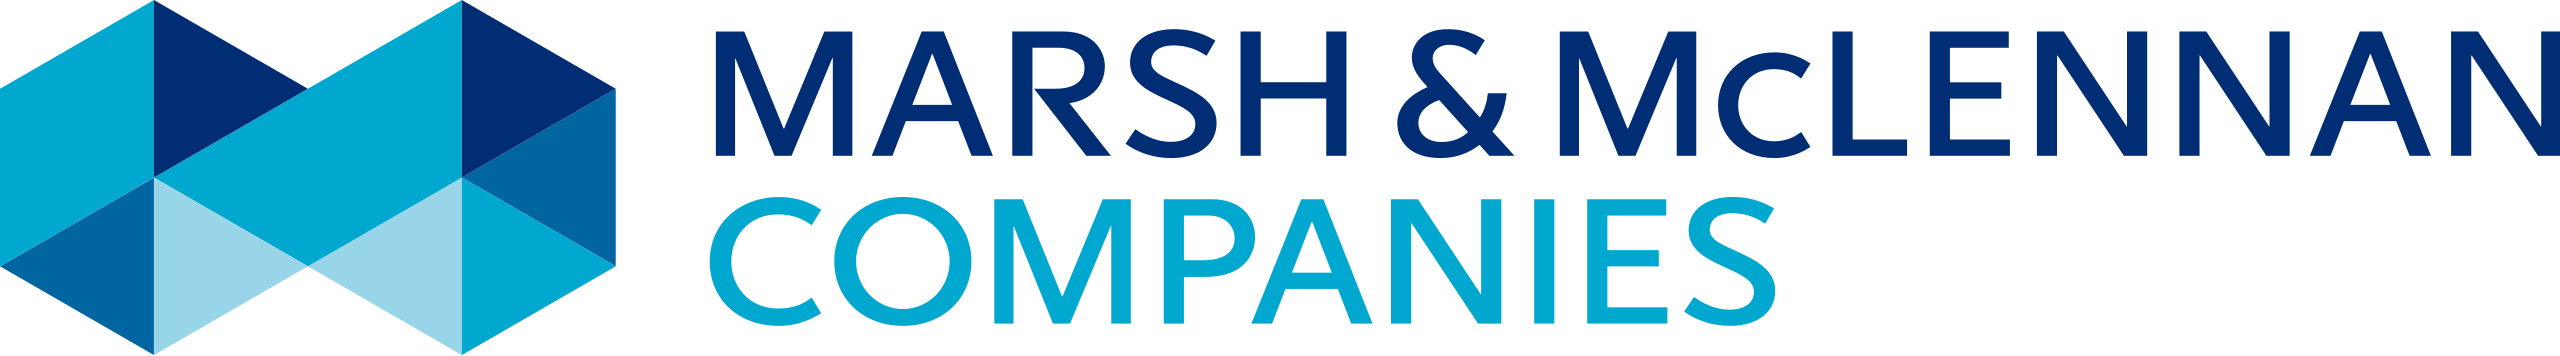 Marsh & McLennan Companies Logo